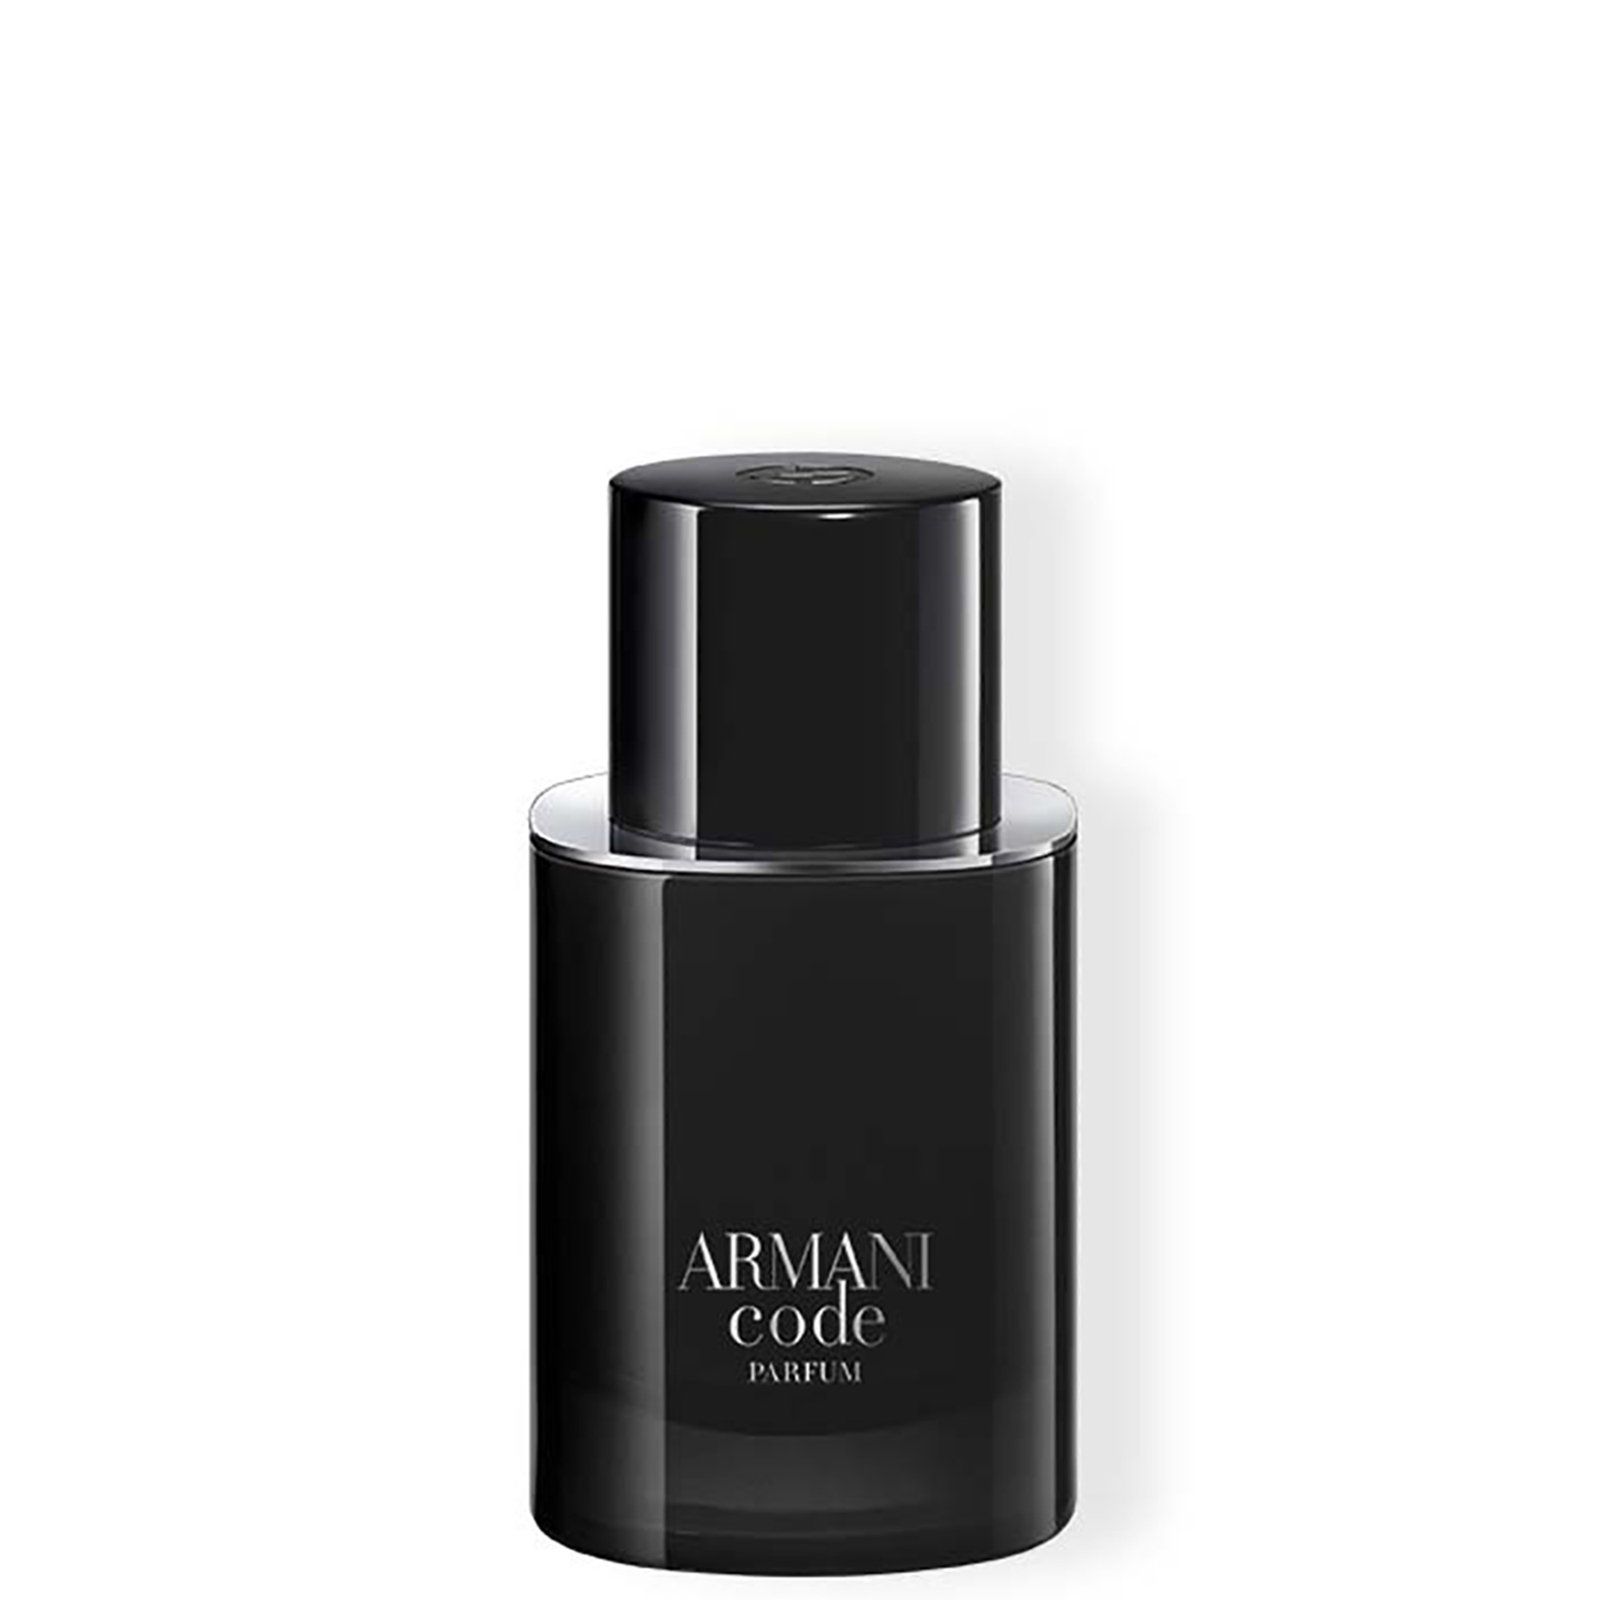 Image of Armani Code Parfum 50ml